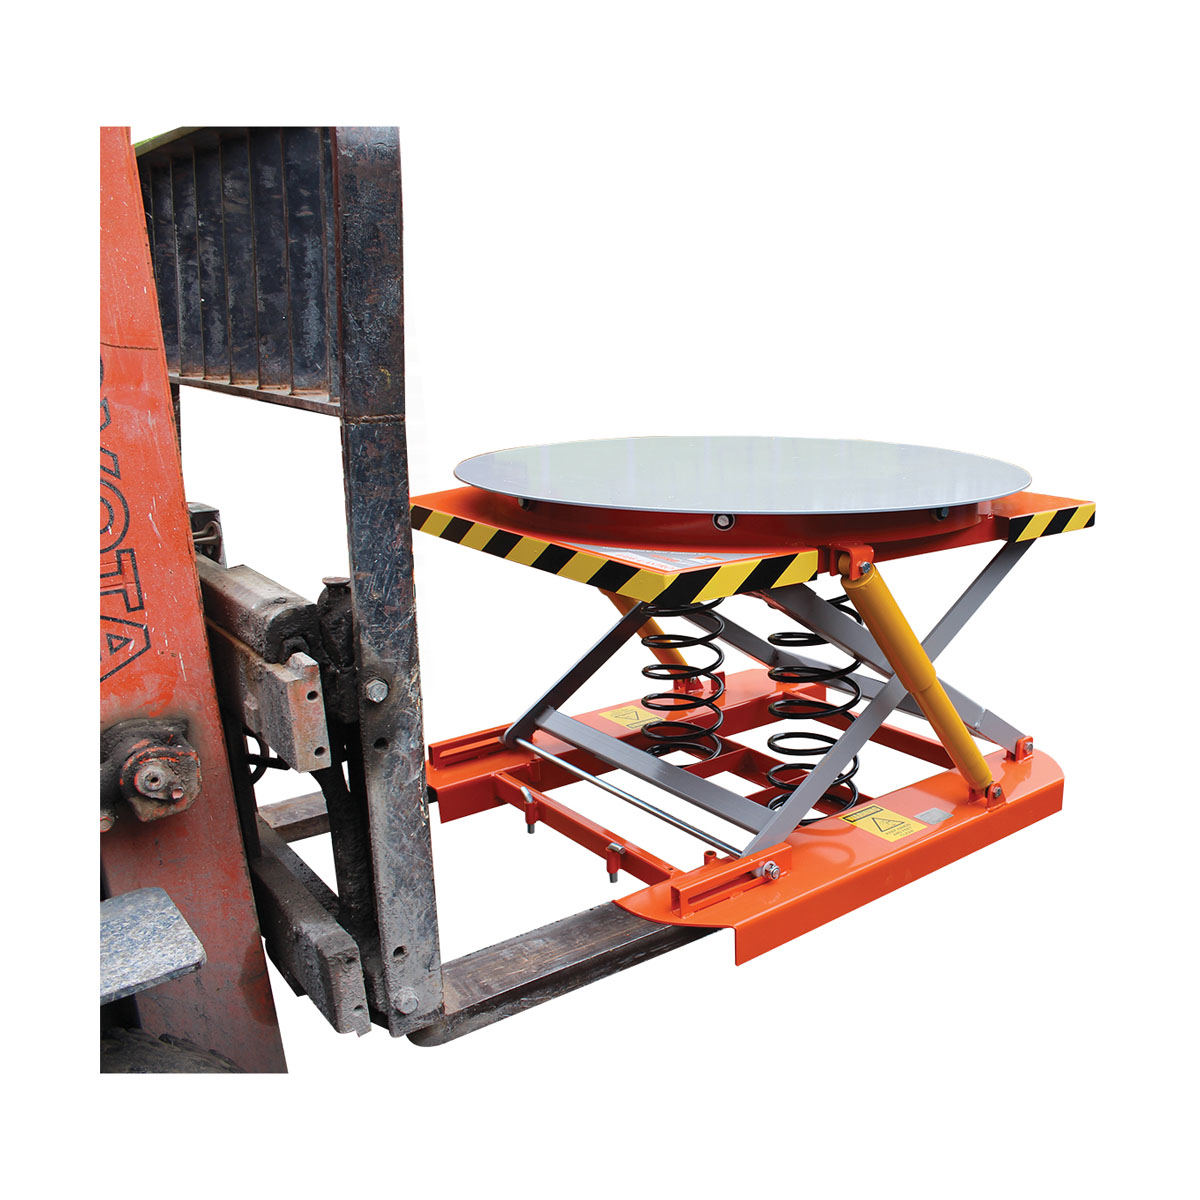 Pallet Scissor Lift Table on Forklift being transported